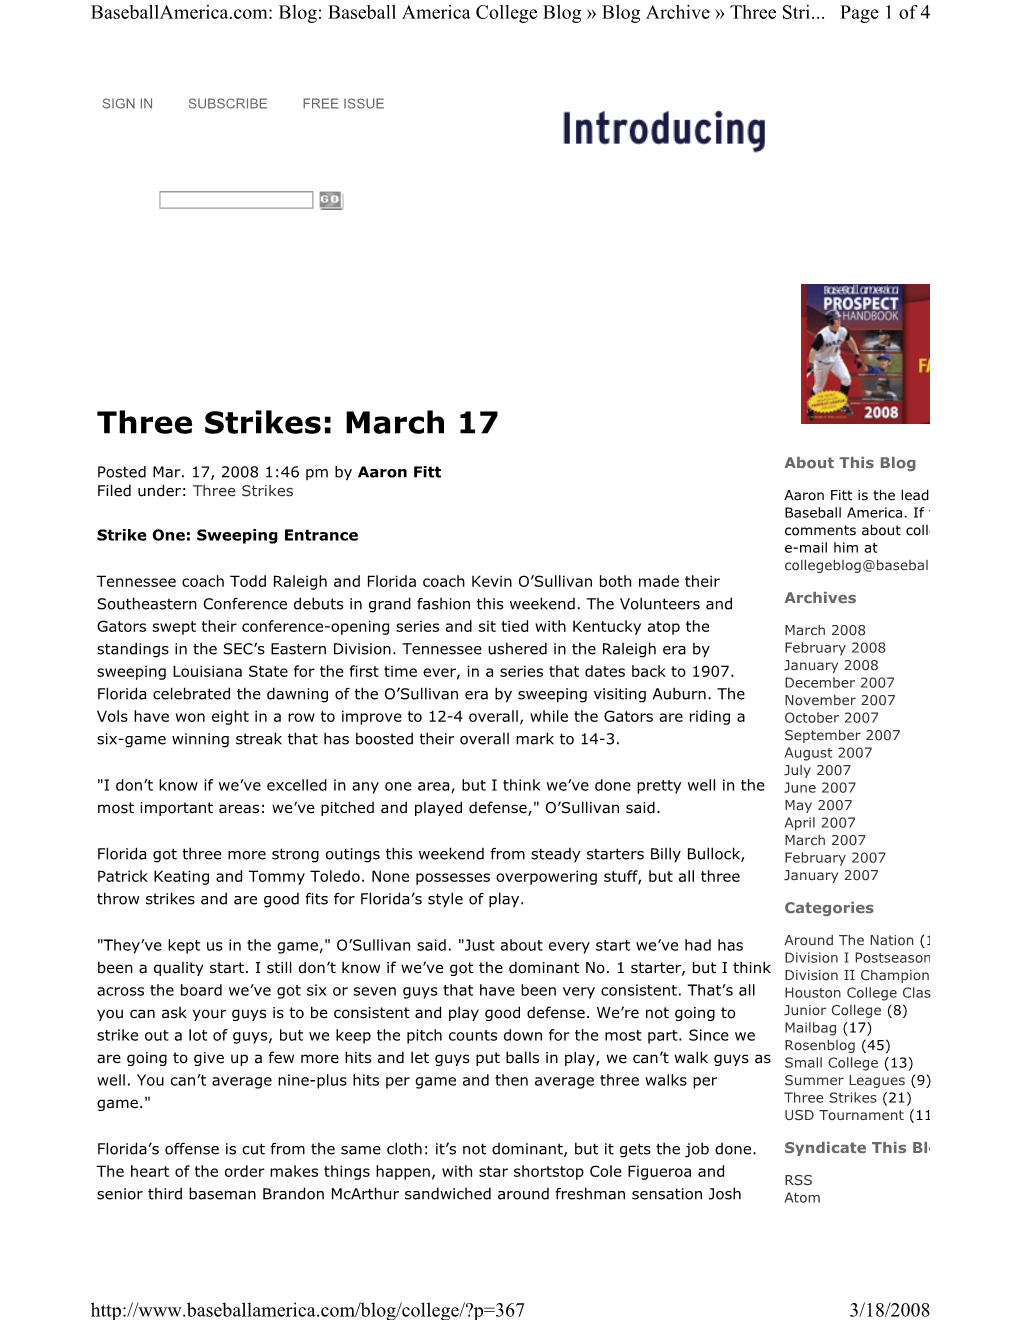 Three Strikes: March 17